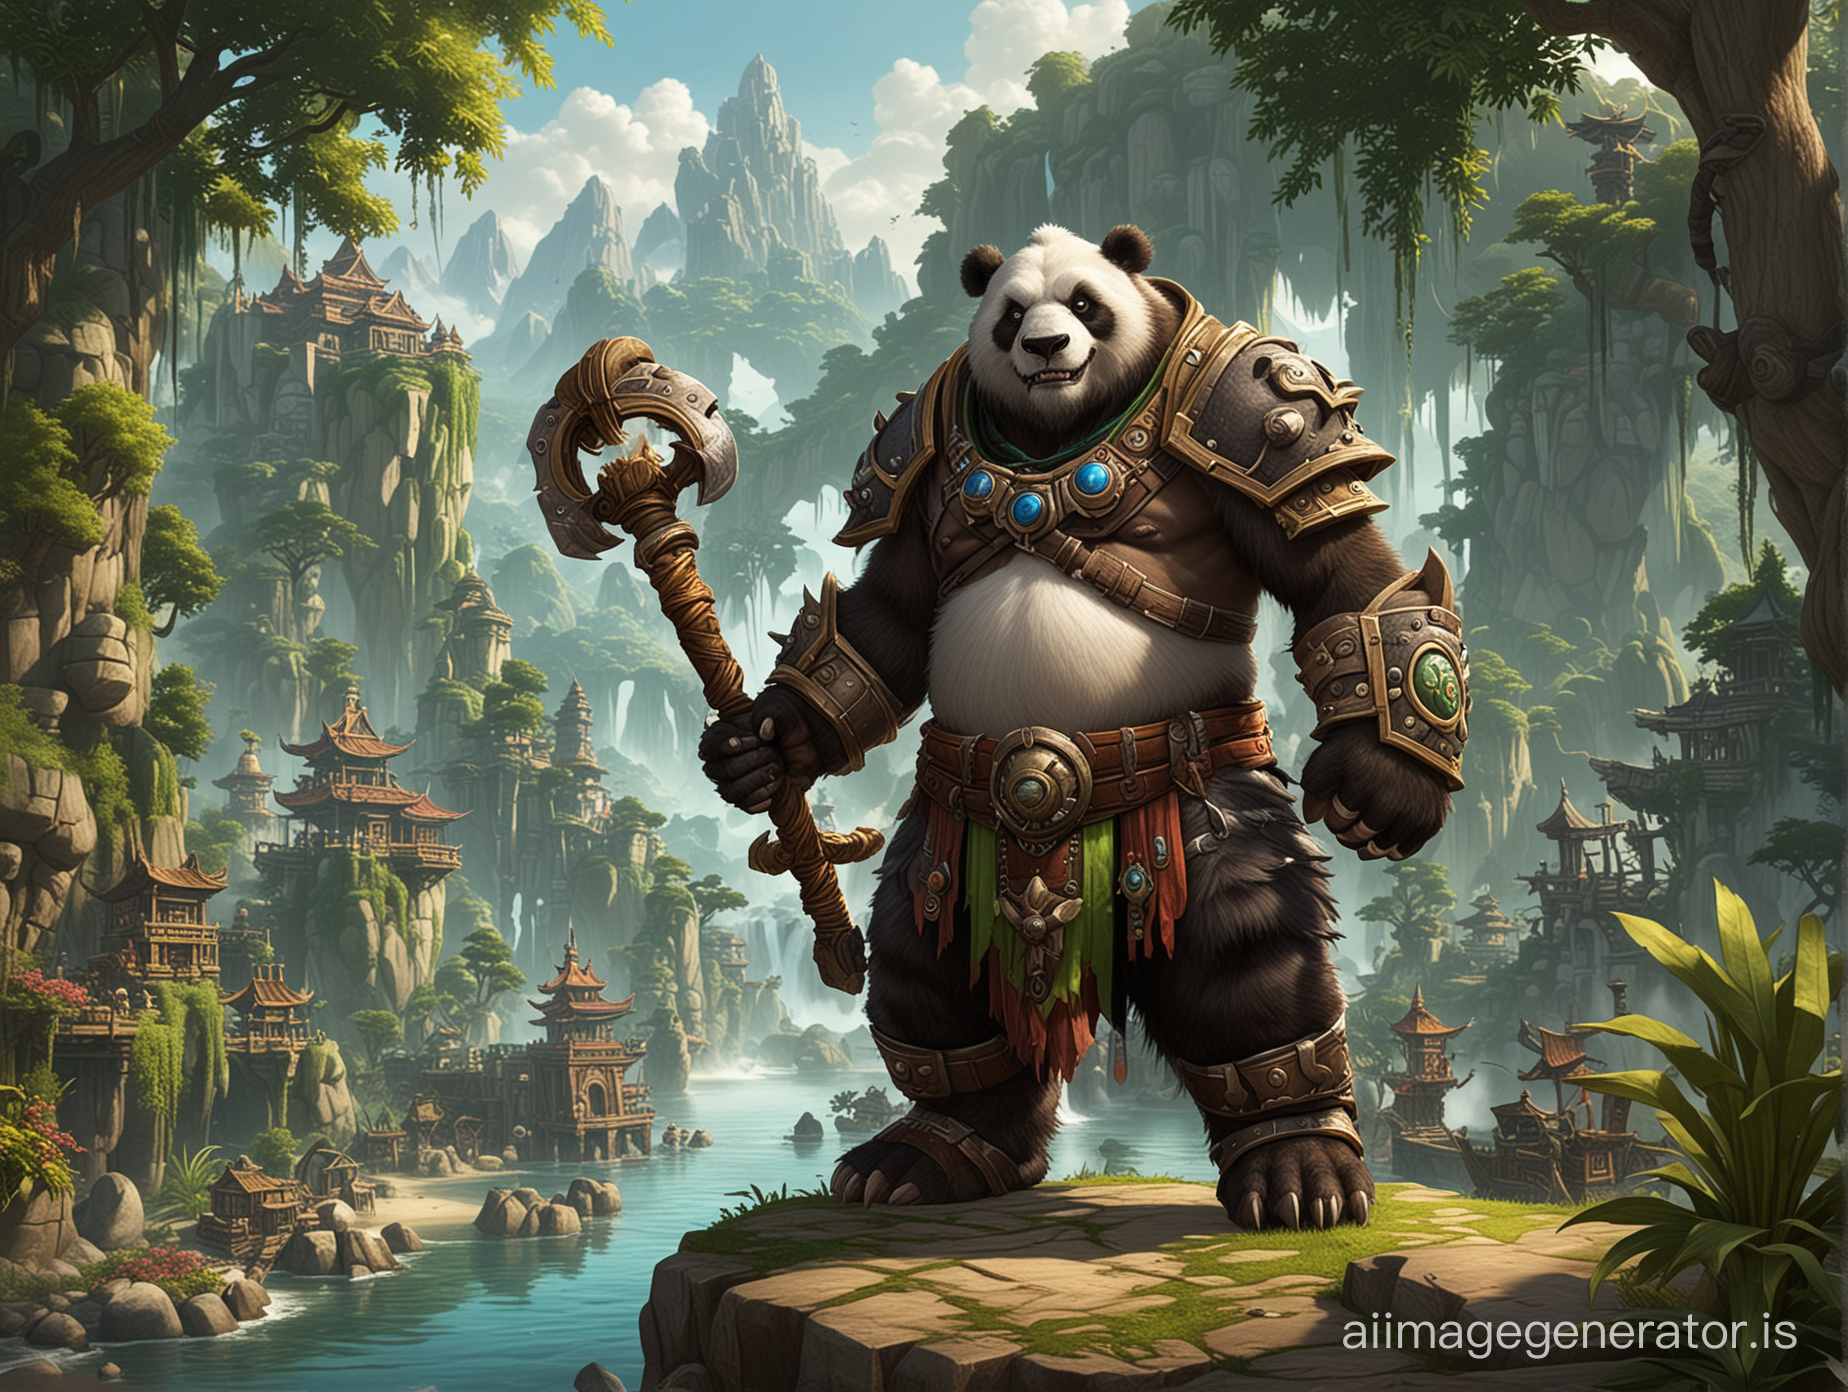 Pandaria from World of Warcraft